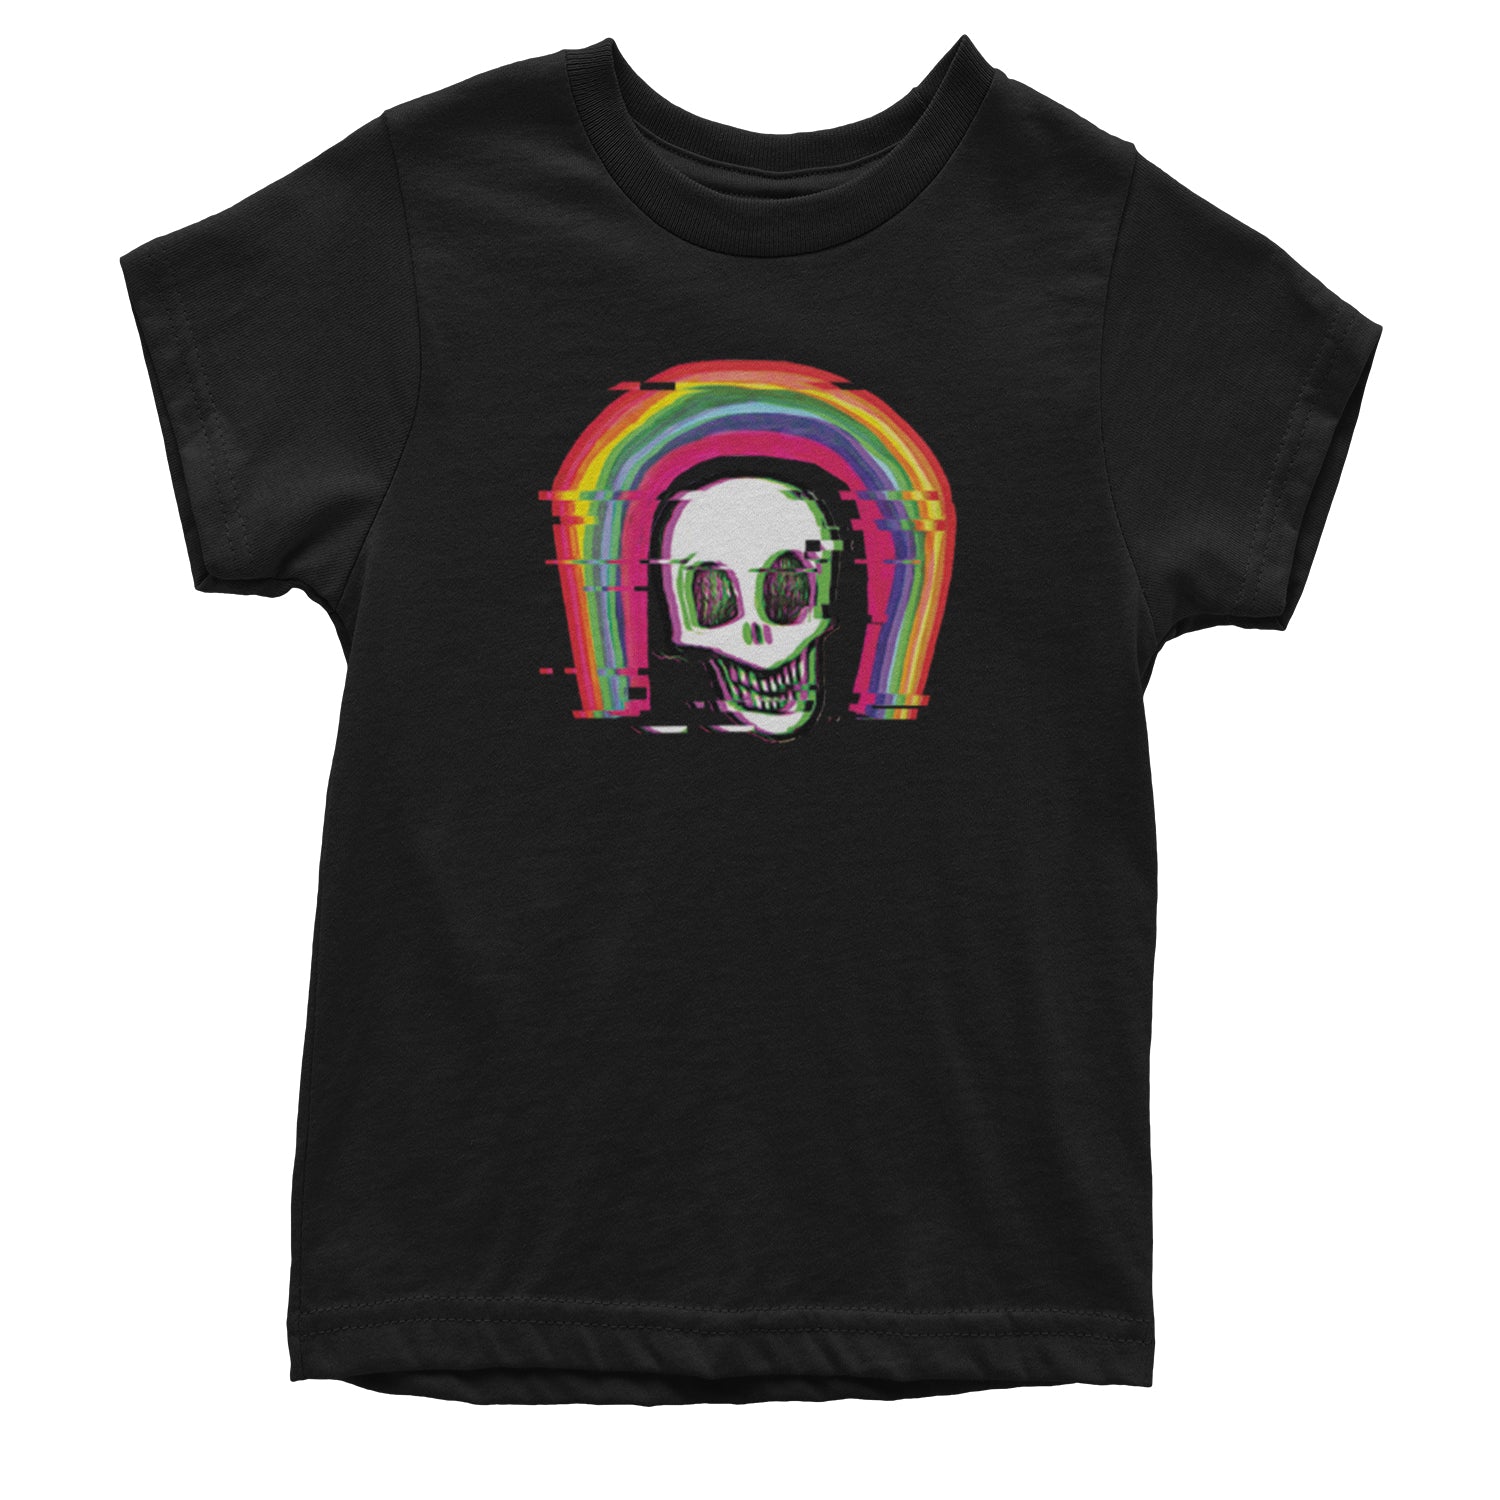 Rainbow Distorted Skull Youth T-shirt